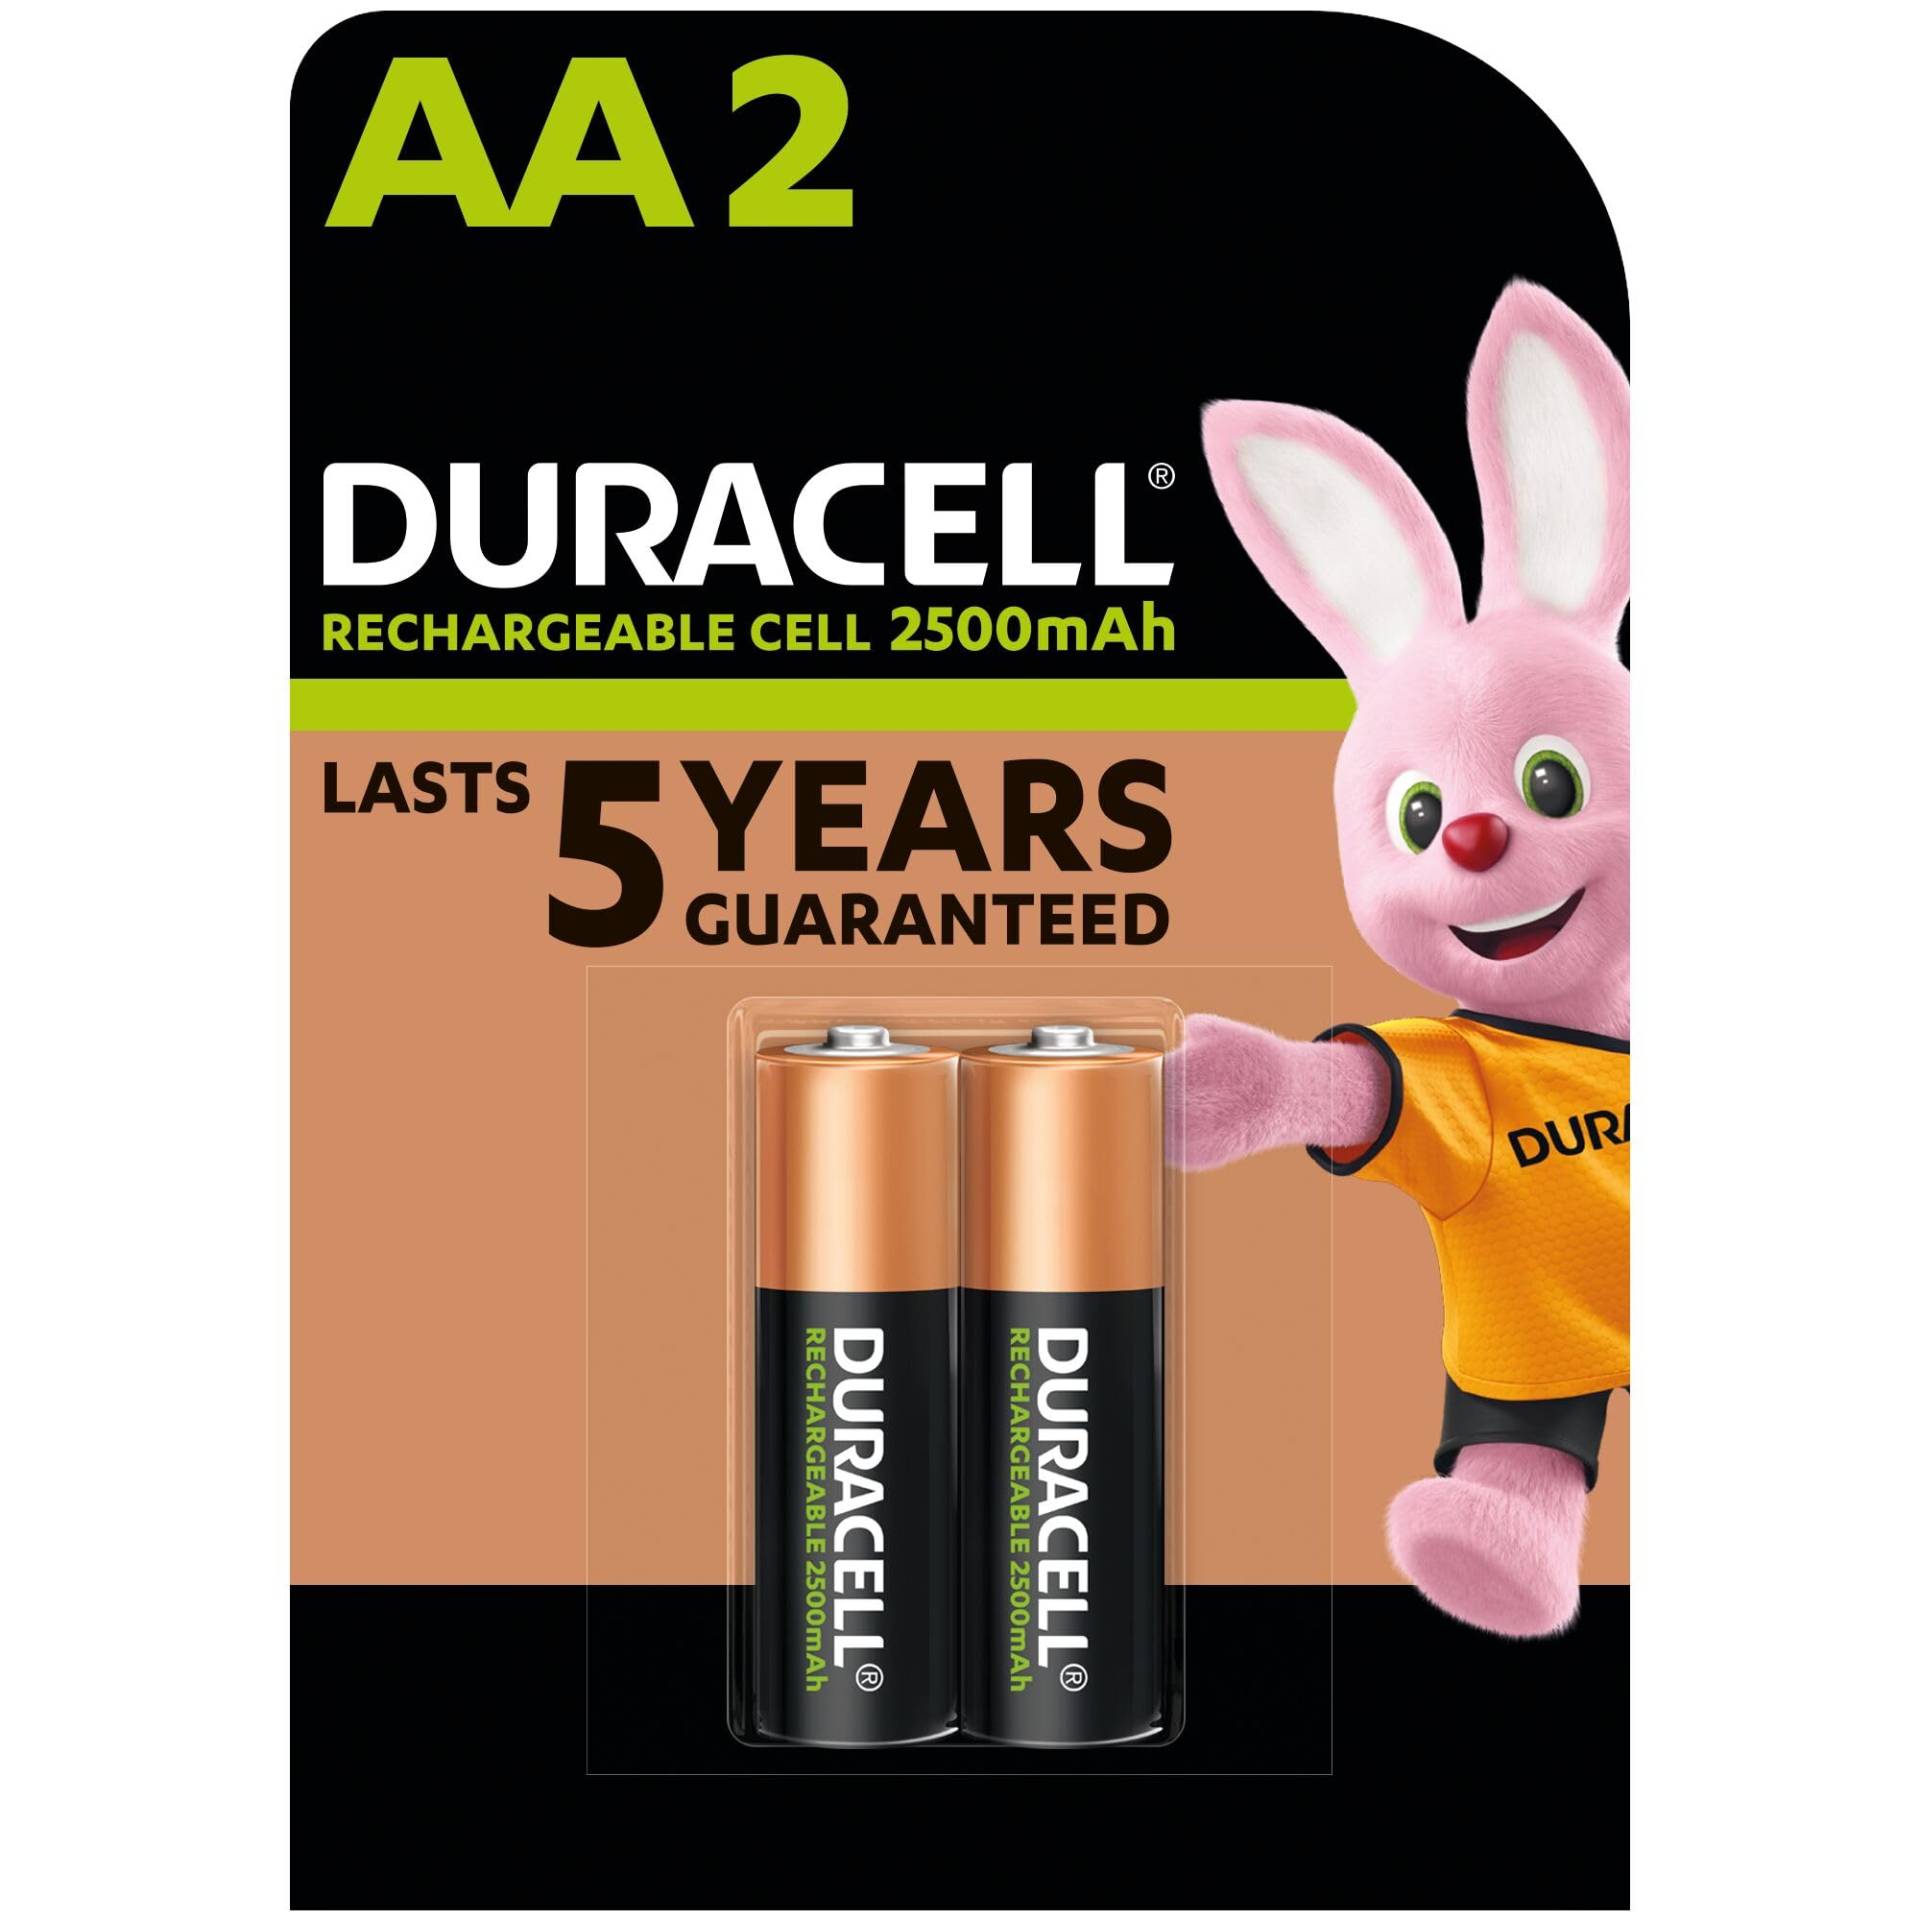 Duracell Ultra HR6 AA Akkus mit geringer Selbstentladung (2500mAh) 2er Pack von Duracell